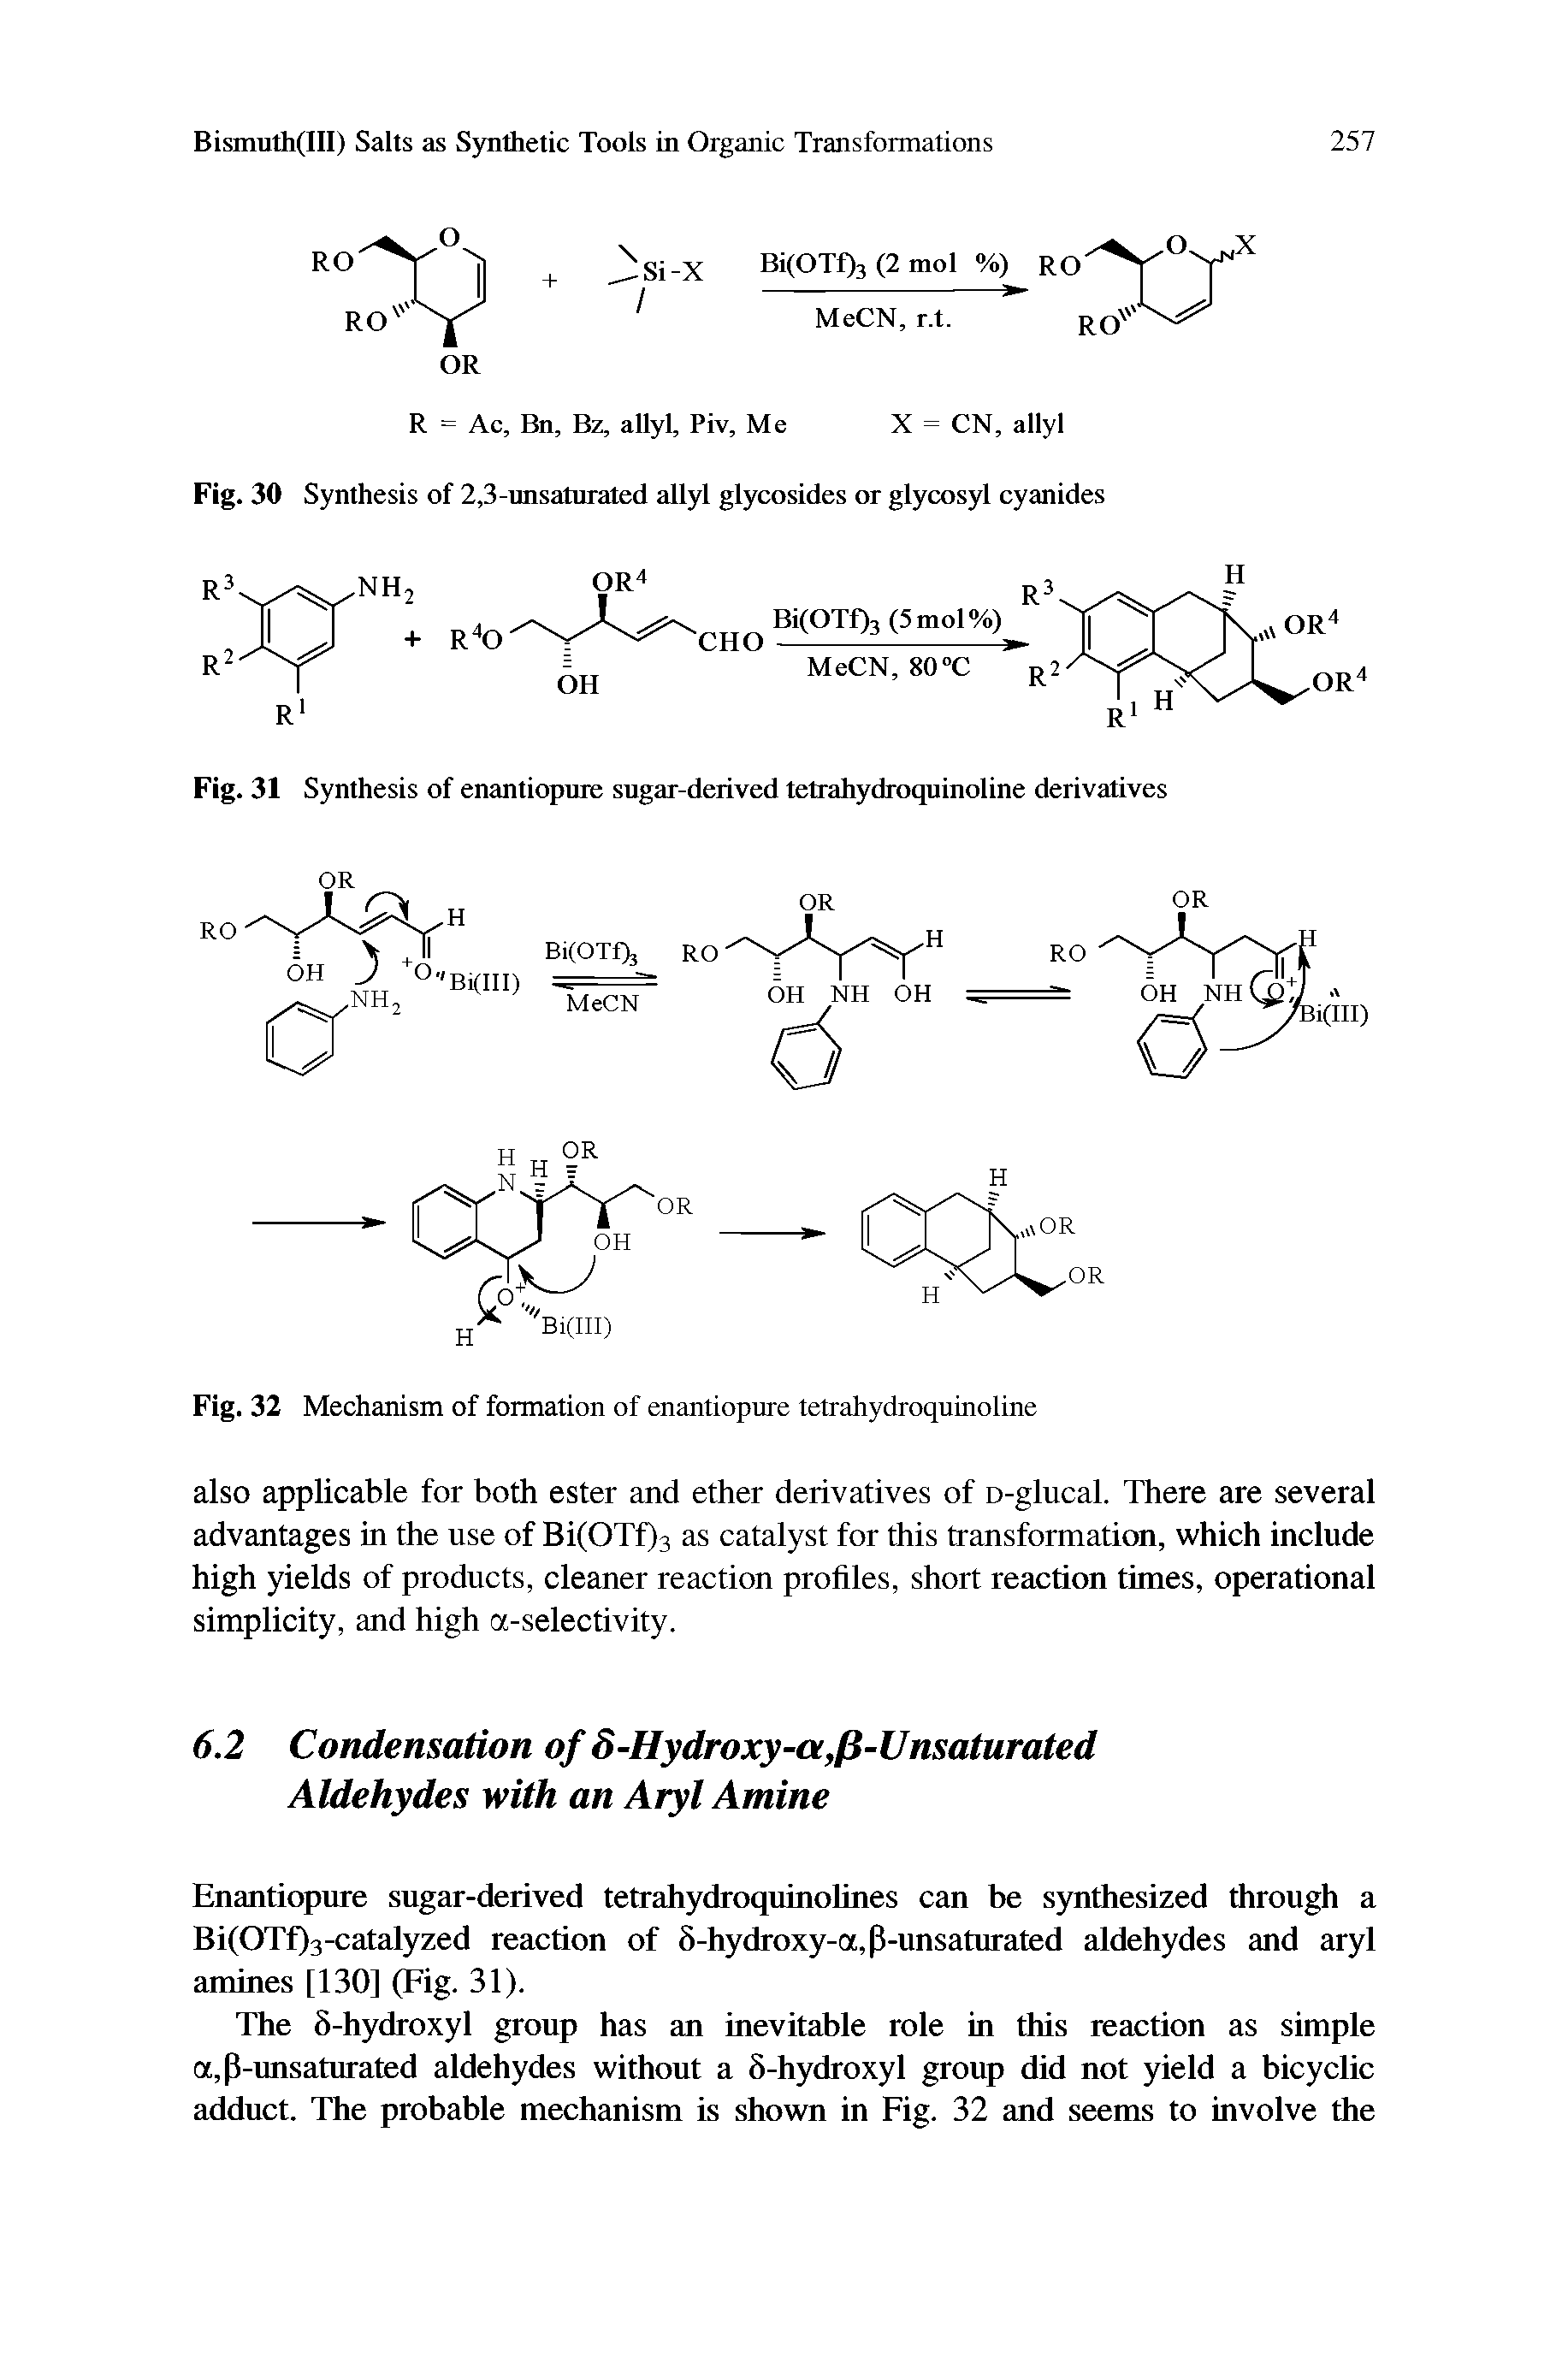 Fig. 31 Synthesis of enantiopure sugar-derived tetrahydroquinoline derivatives...